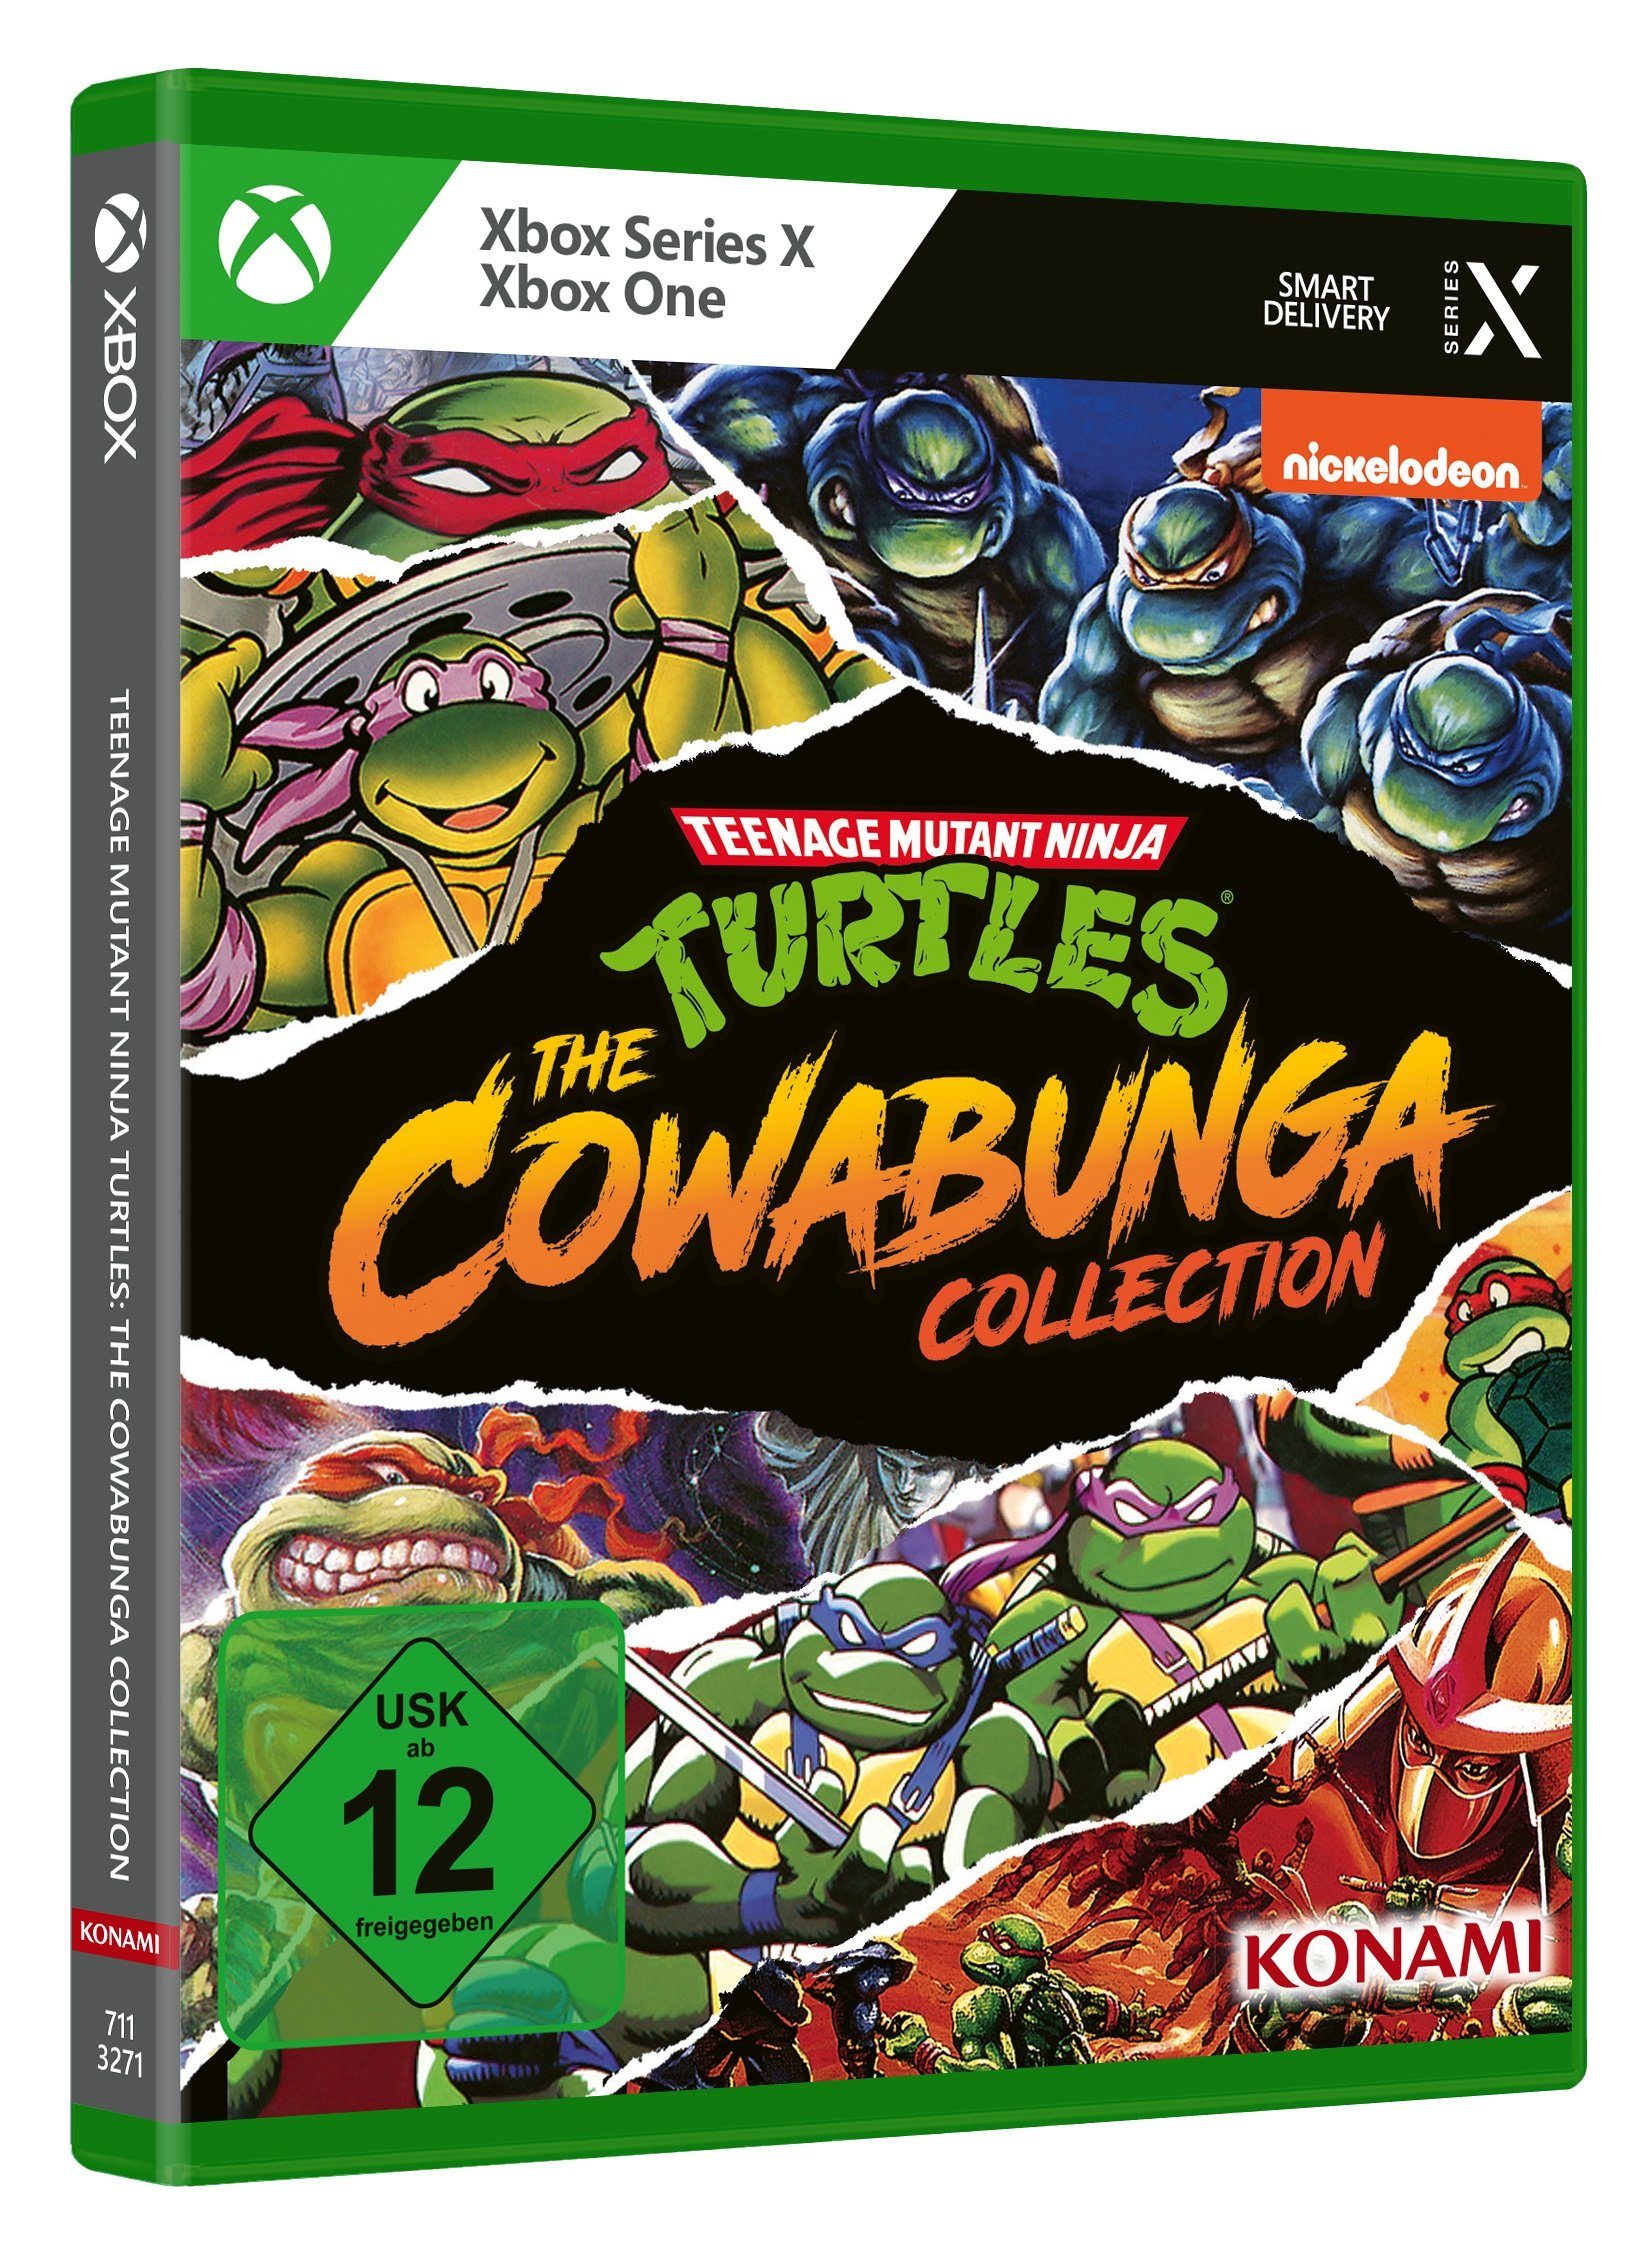 The One, Series Cowabunga Konami - Mutant Turtles Xbox X Collection Xbox Teenage Ninja